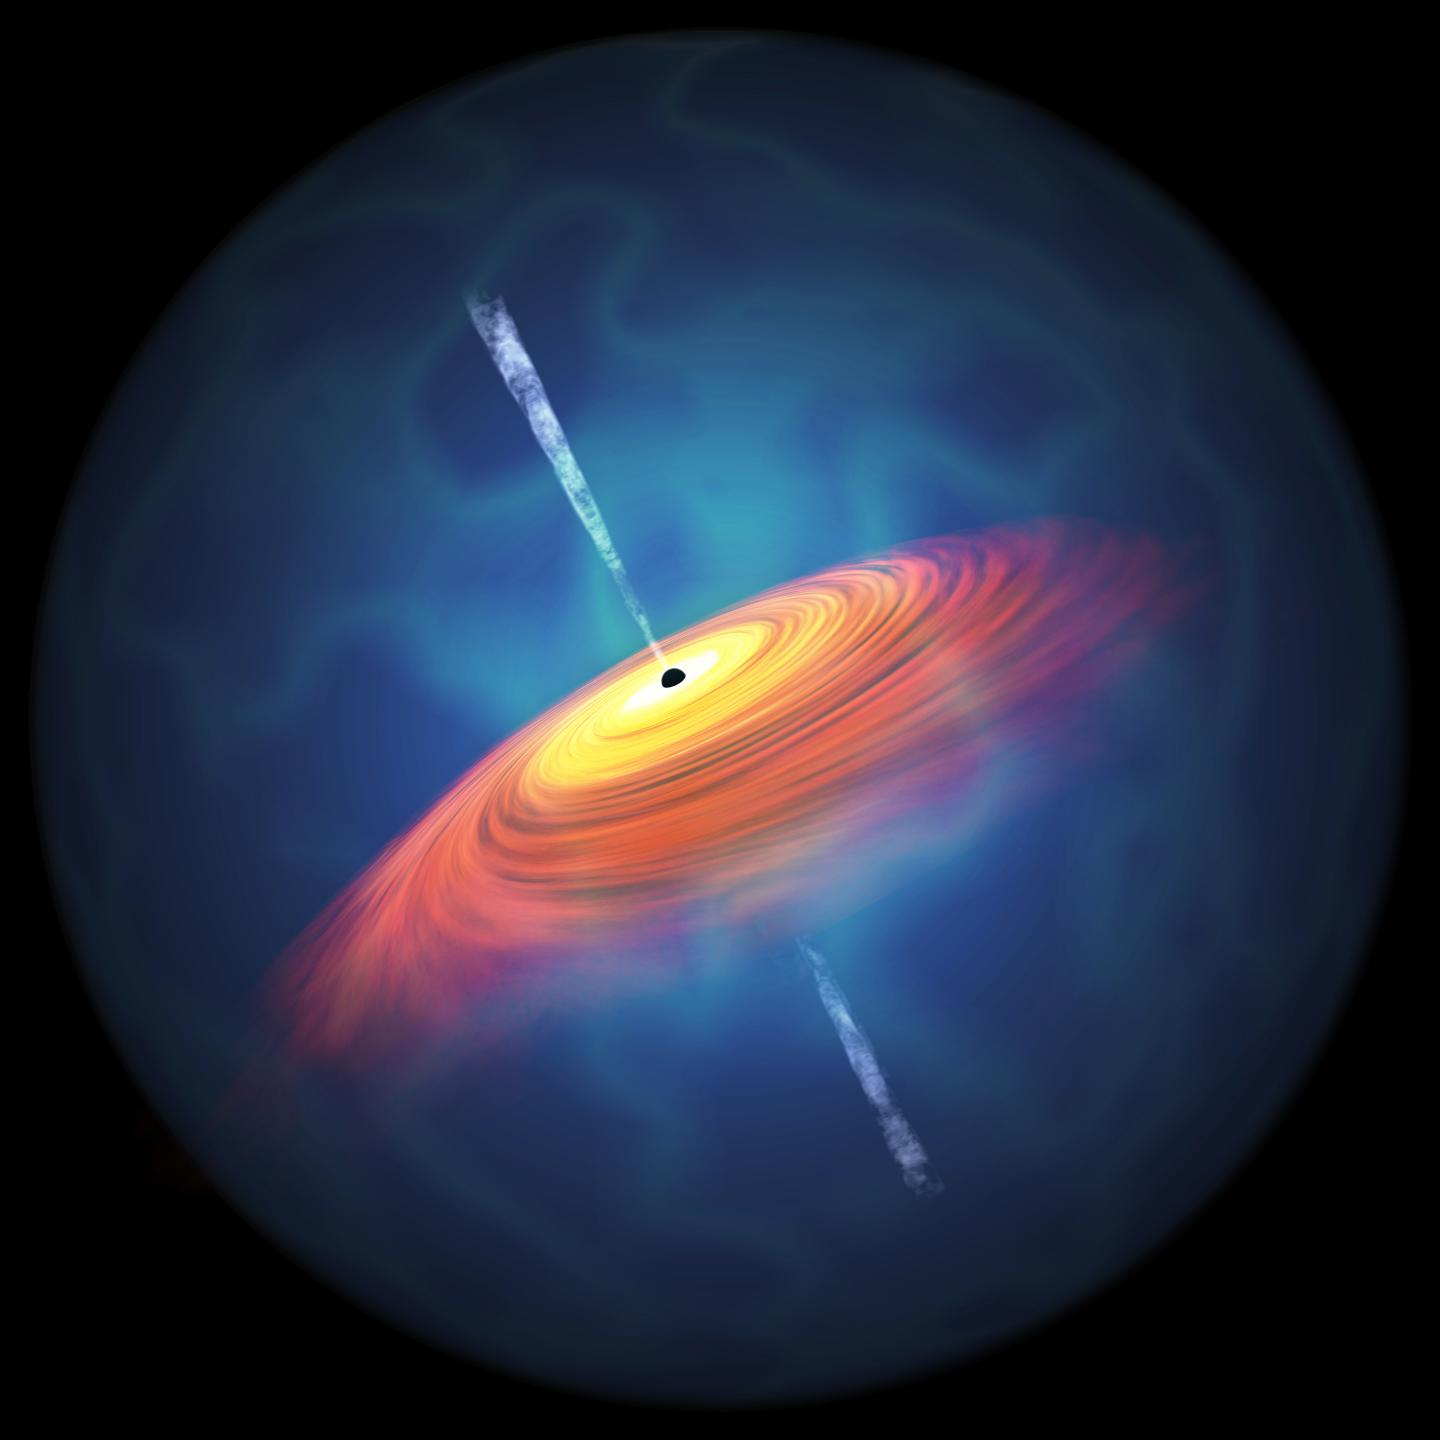 Artist's impression of quasar with supermassive black hole